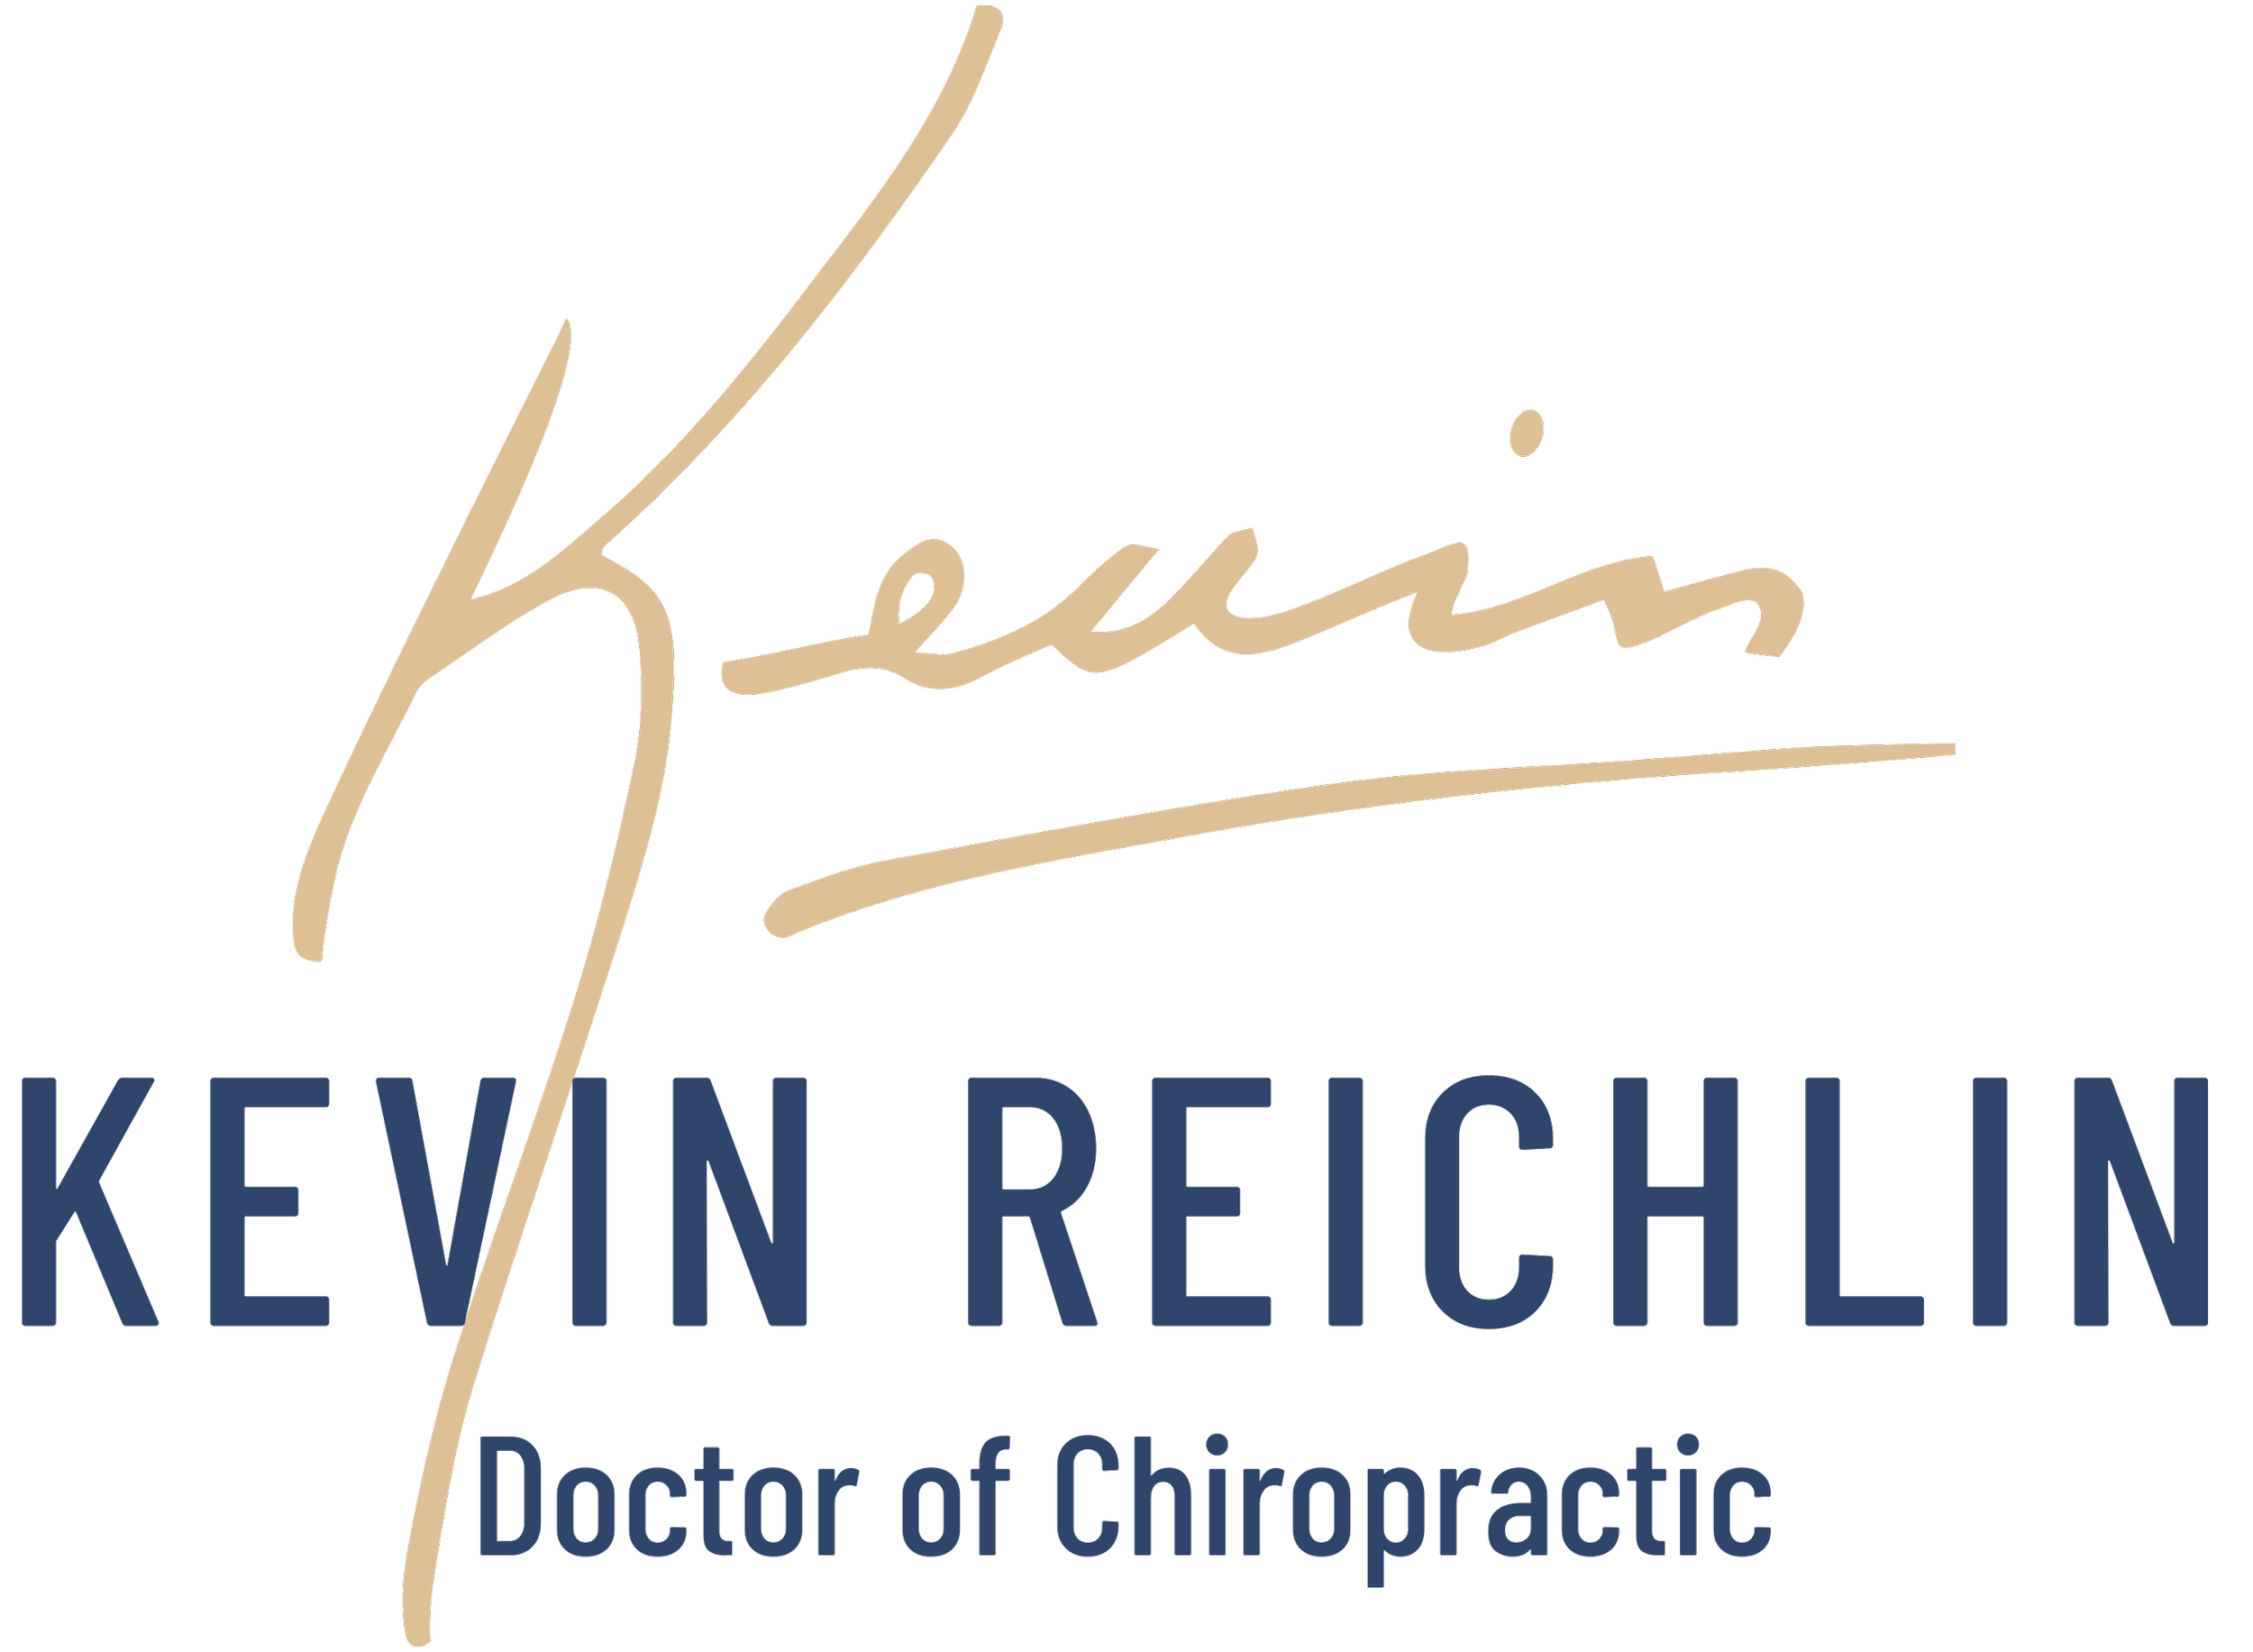 Kevin Reichlin